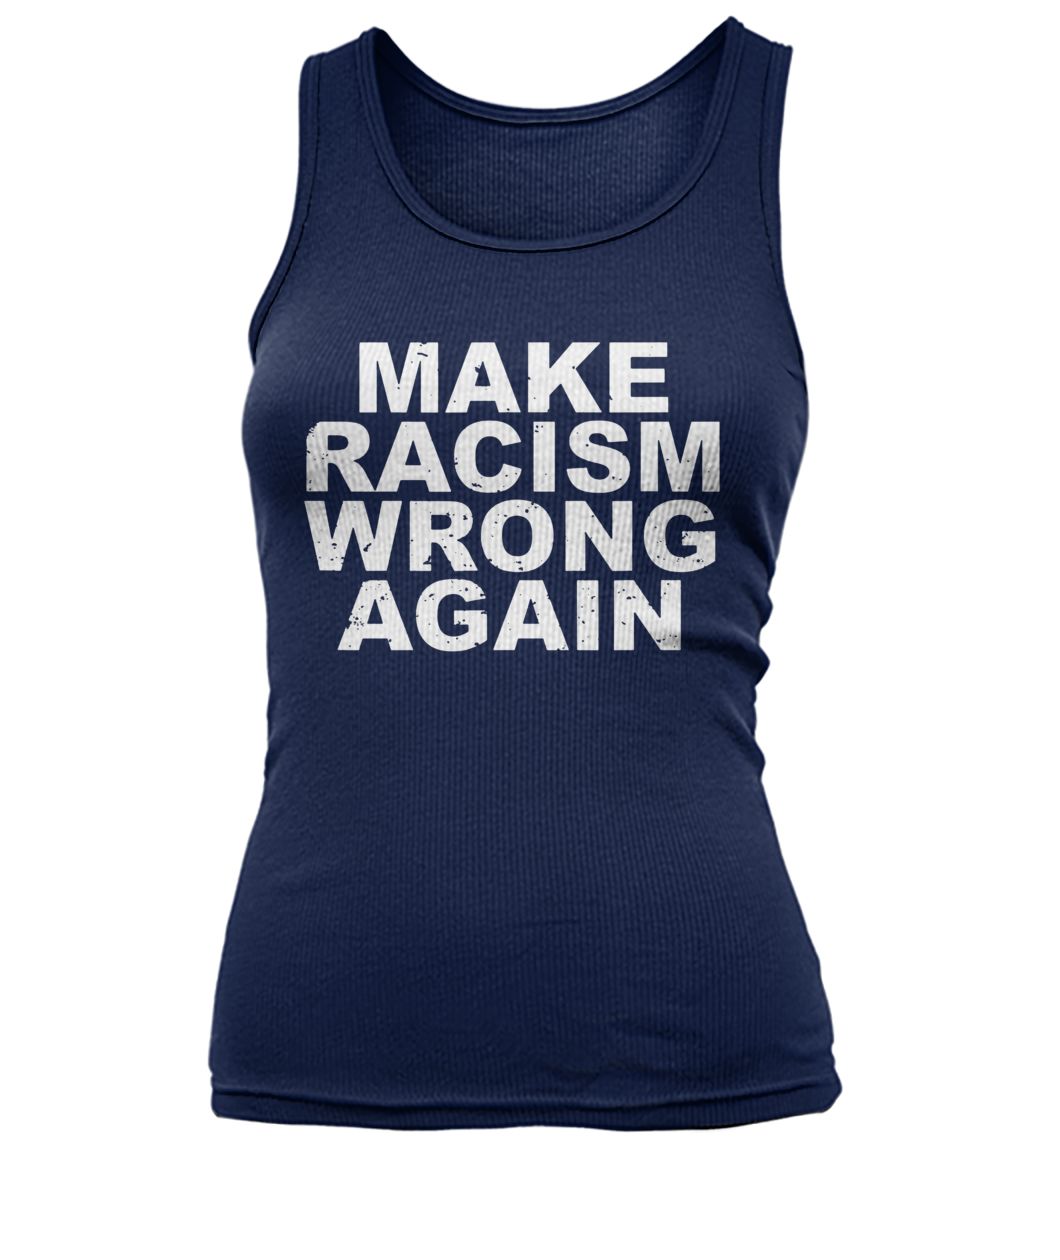 Make racism wrong again anti racism women's tank top